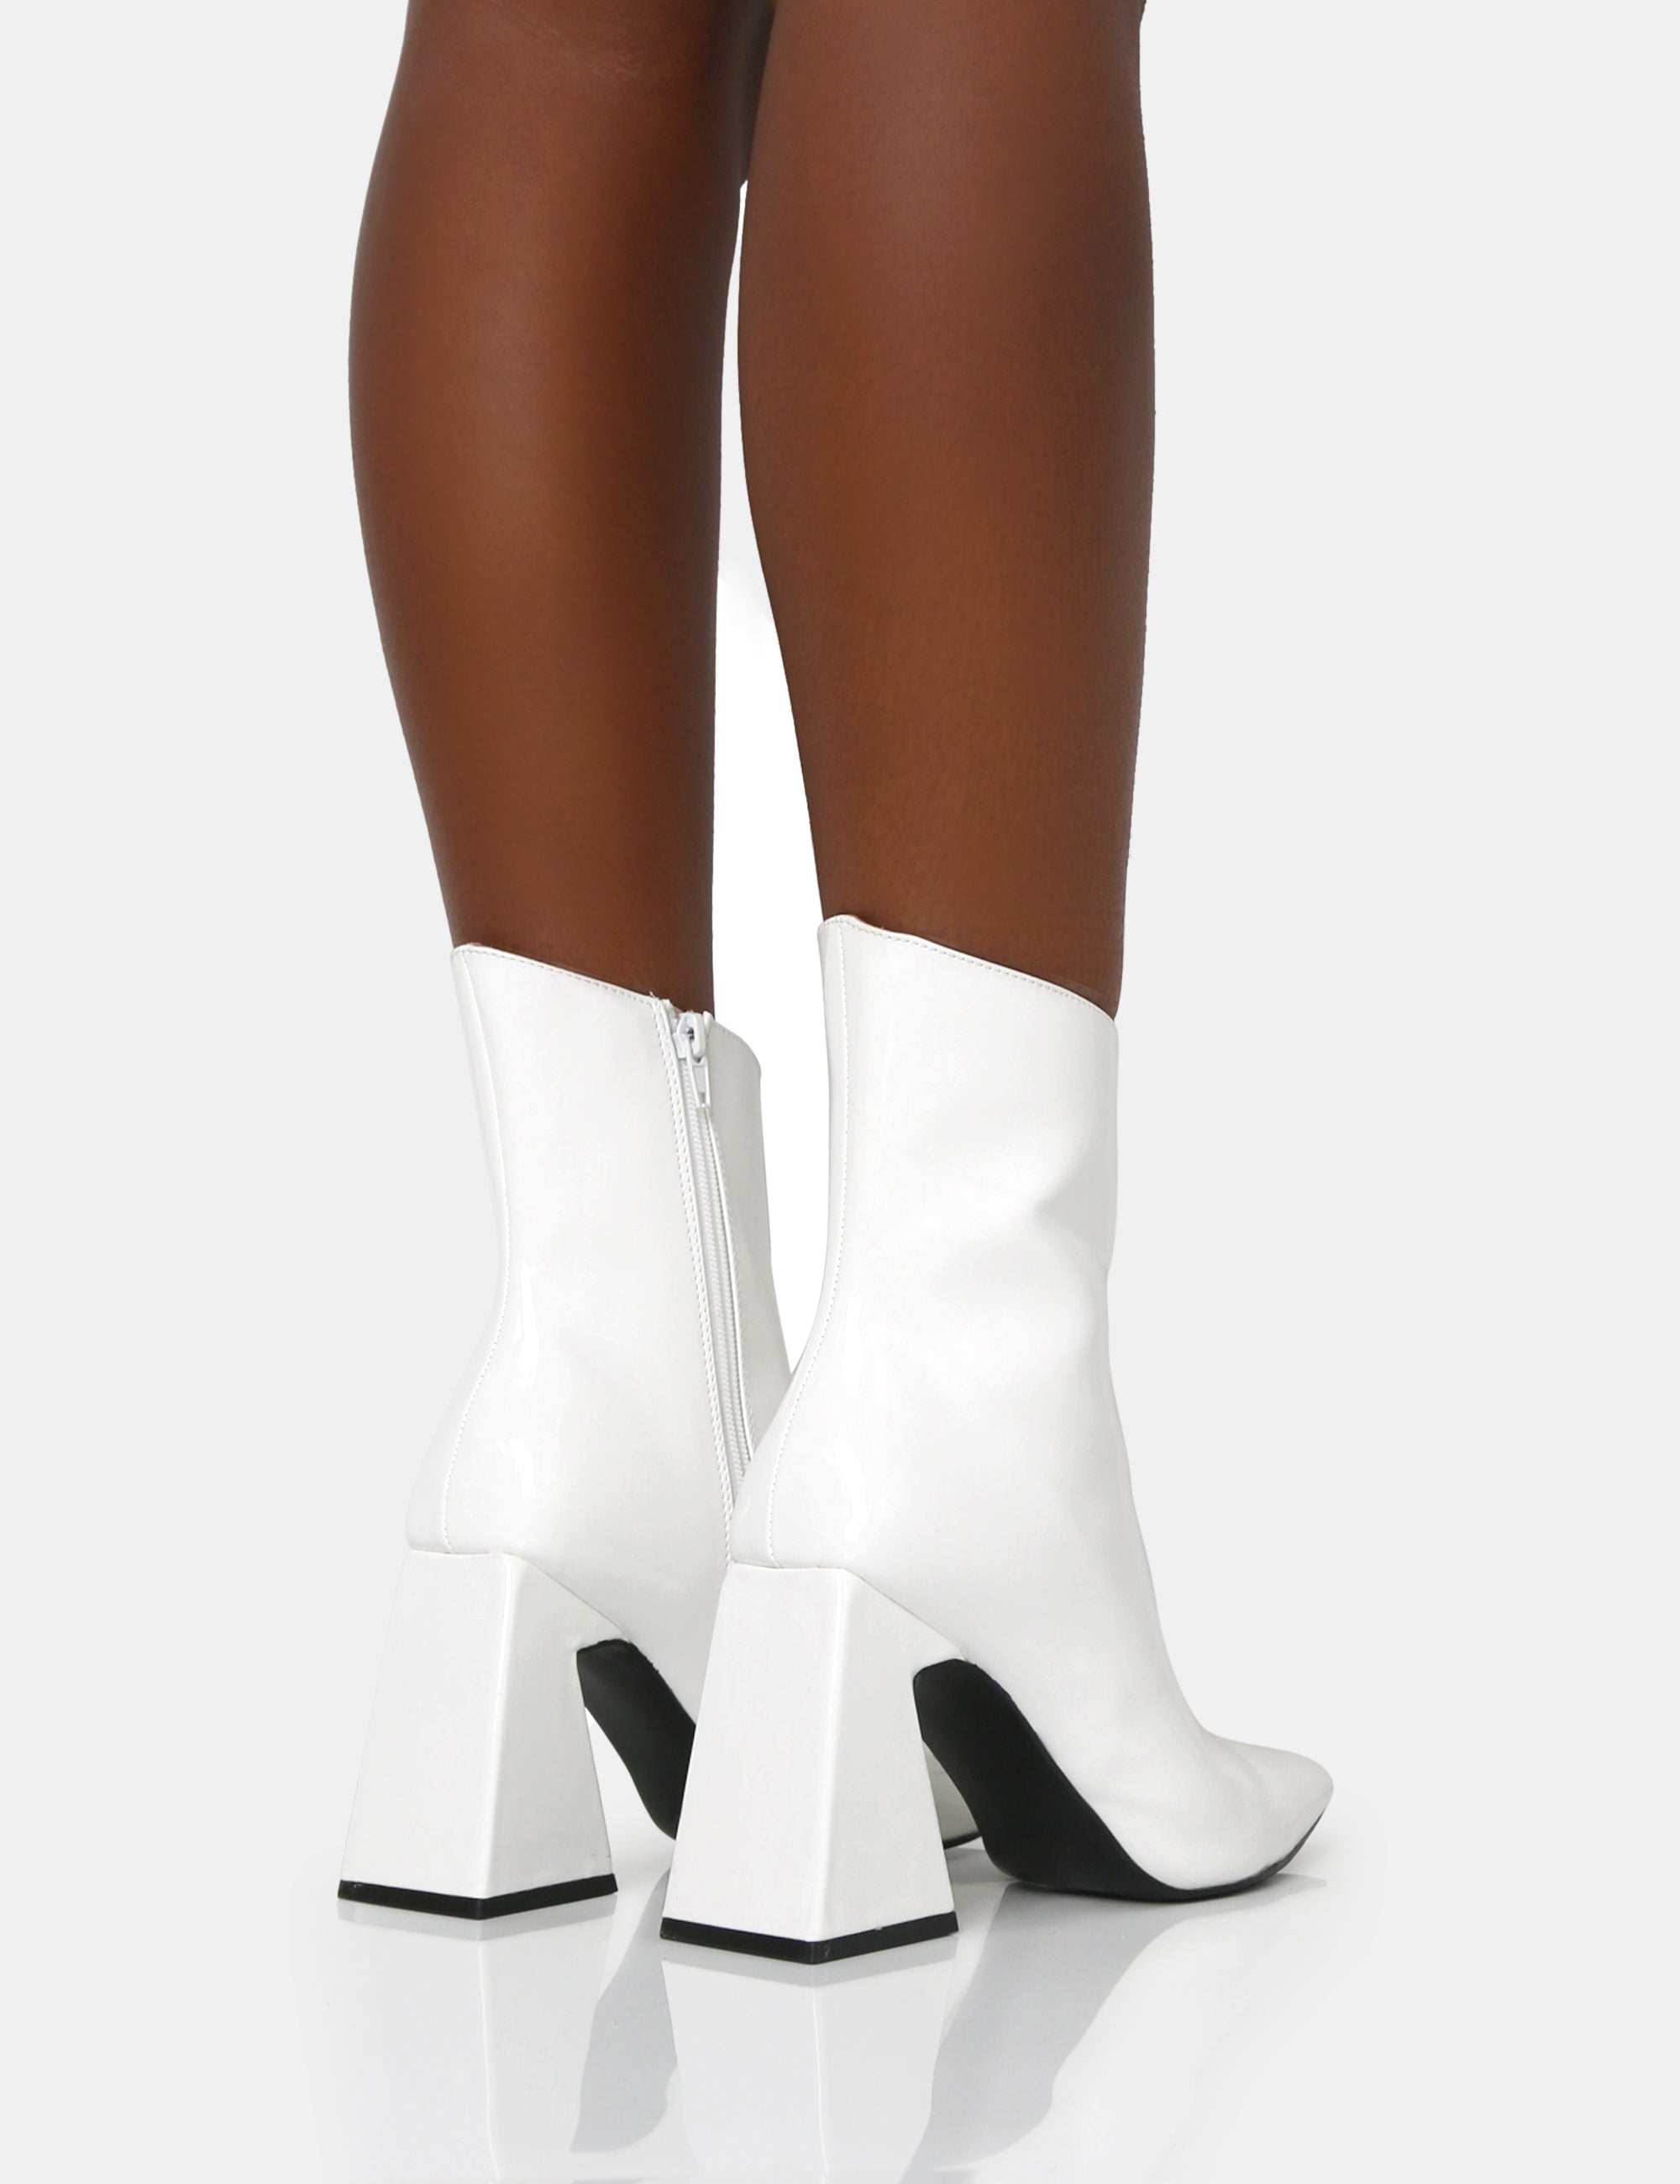 Women Ankle Boots Motor Cowboy Chunky Heel Round Toe Casual Chelsea Biker  Boots | eBay